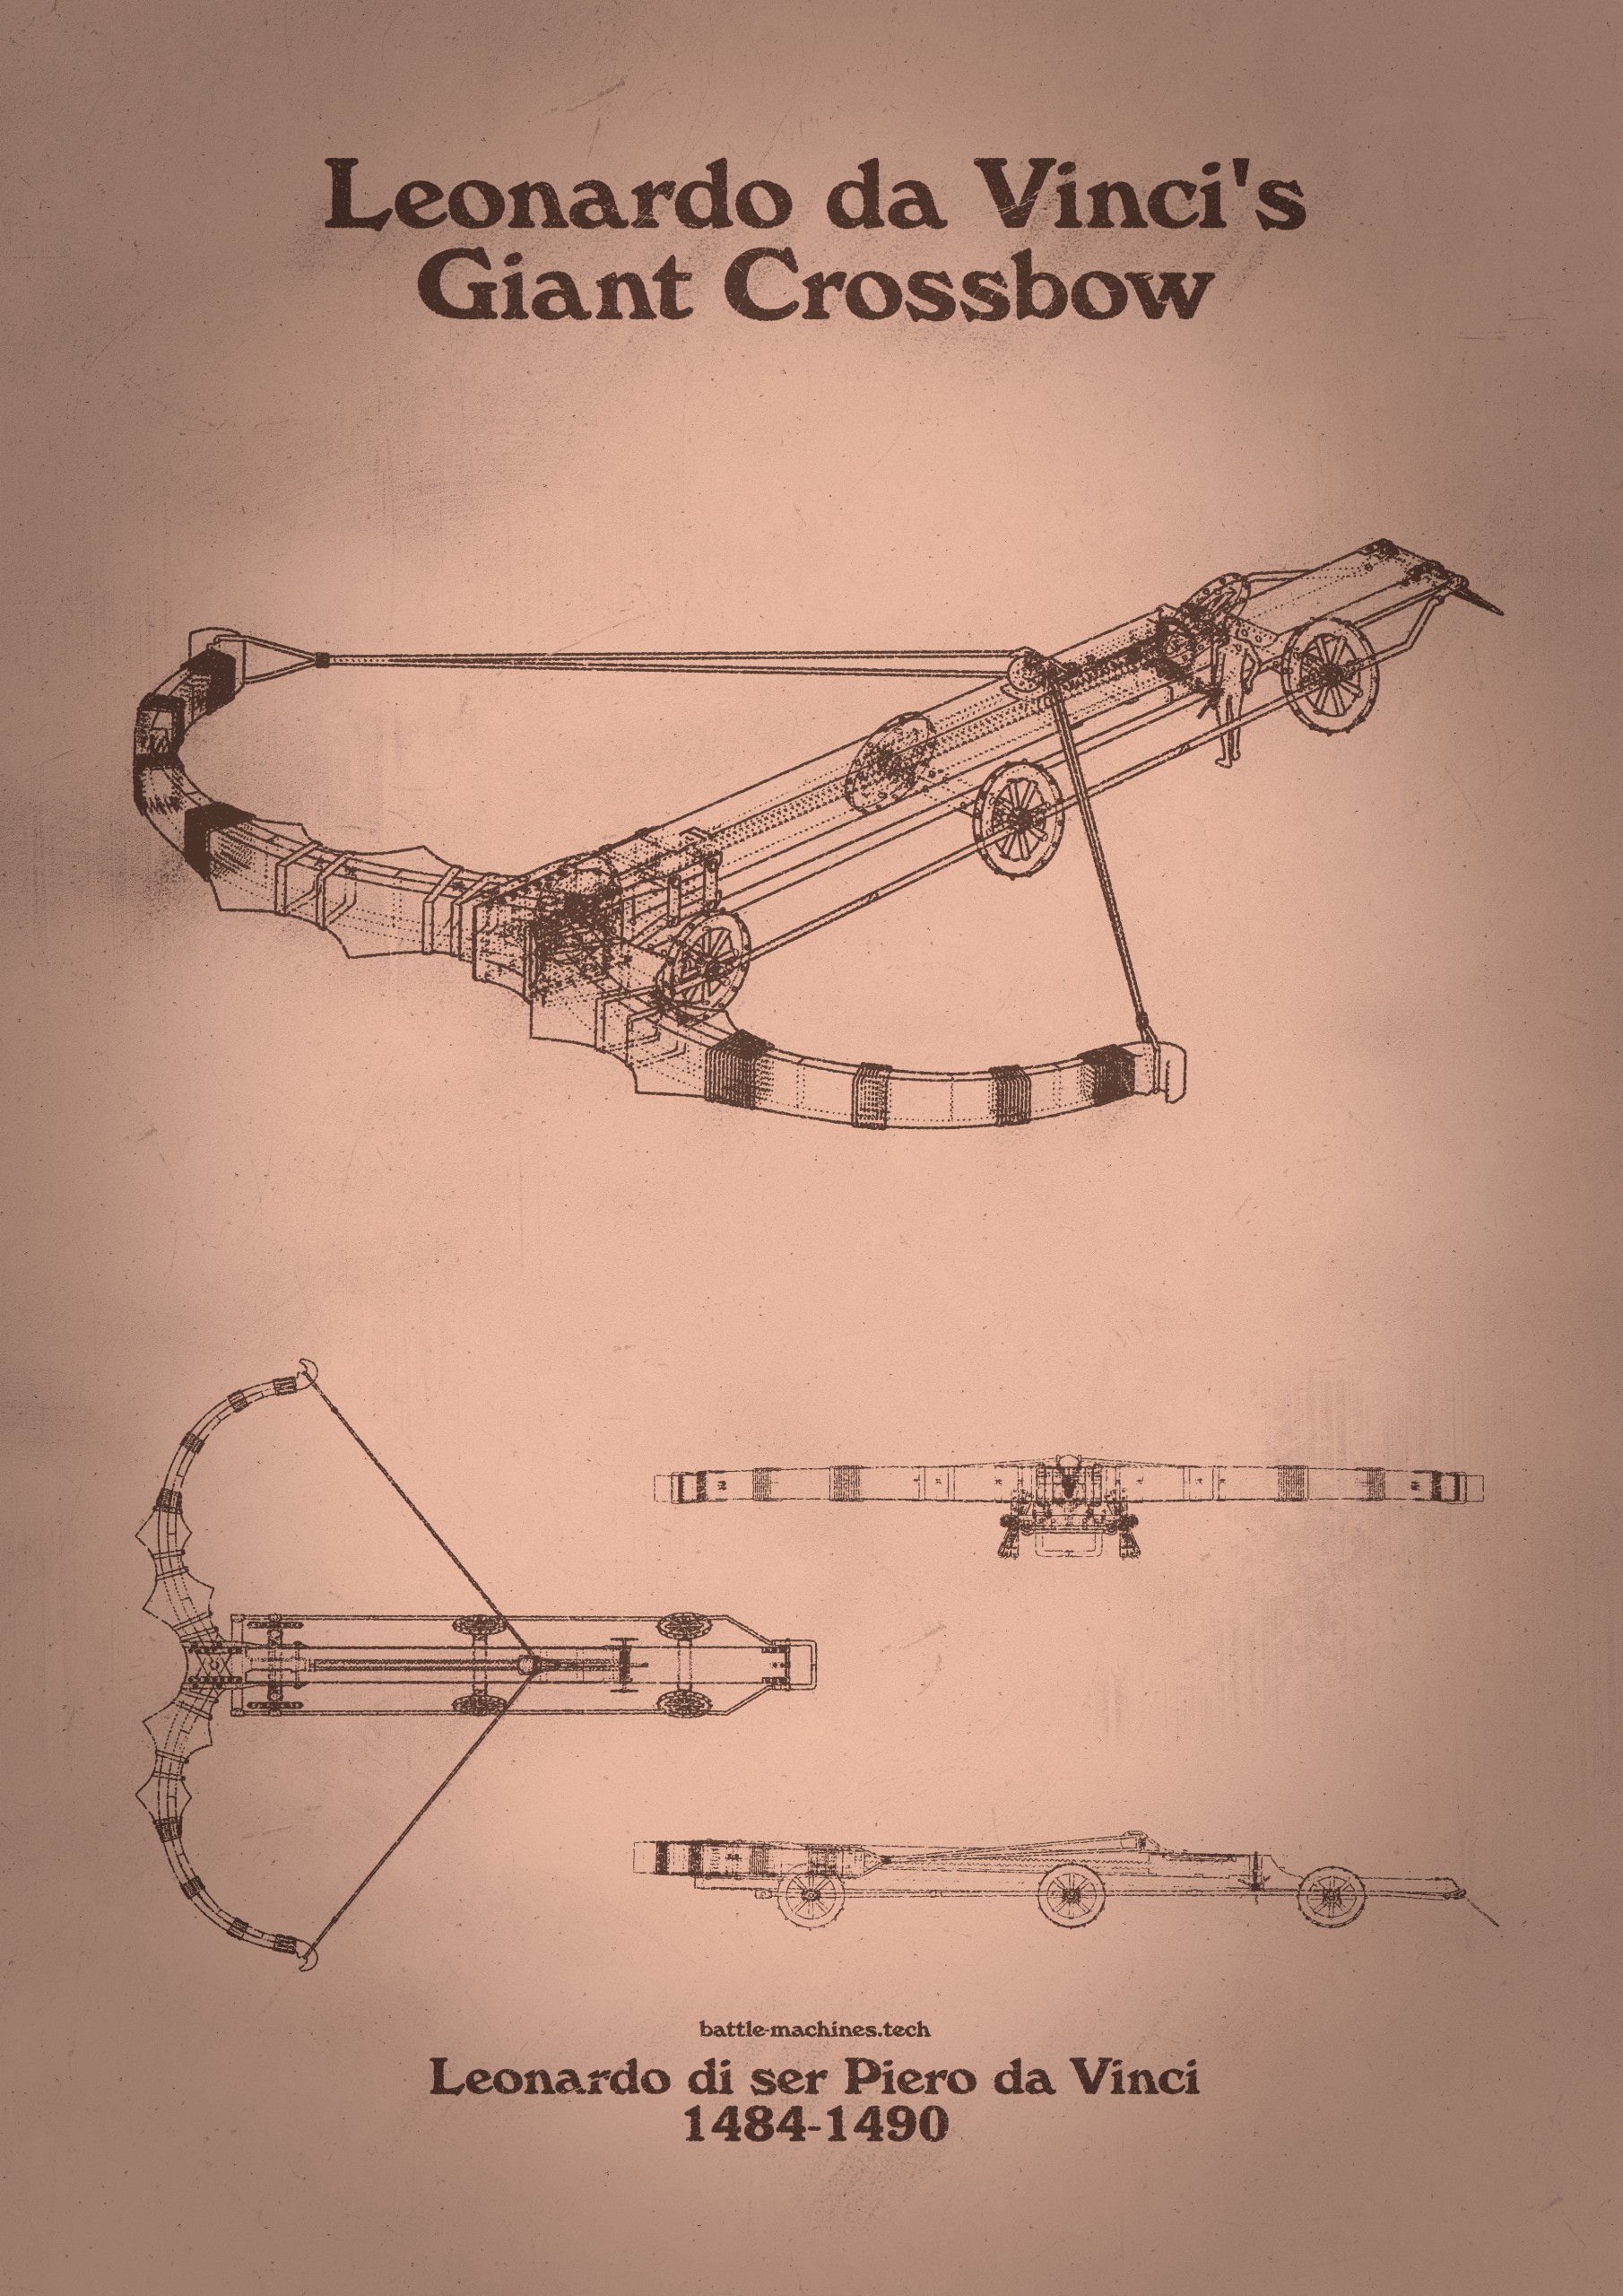 Da vinci's giant crossbow - patent art